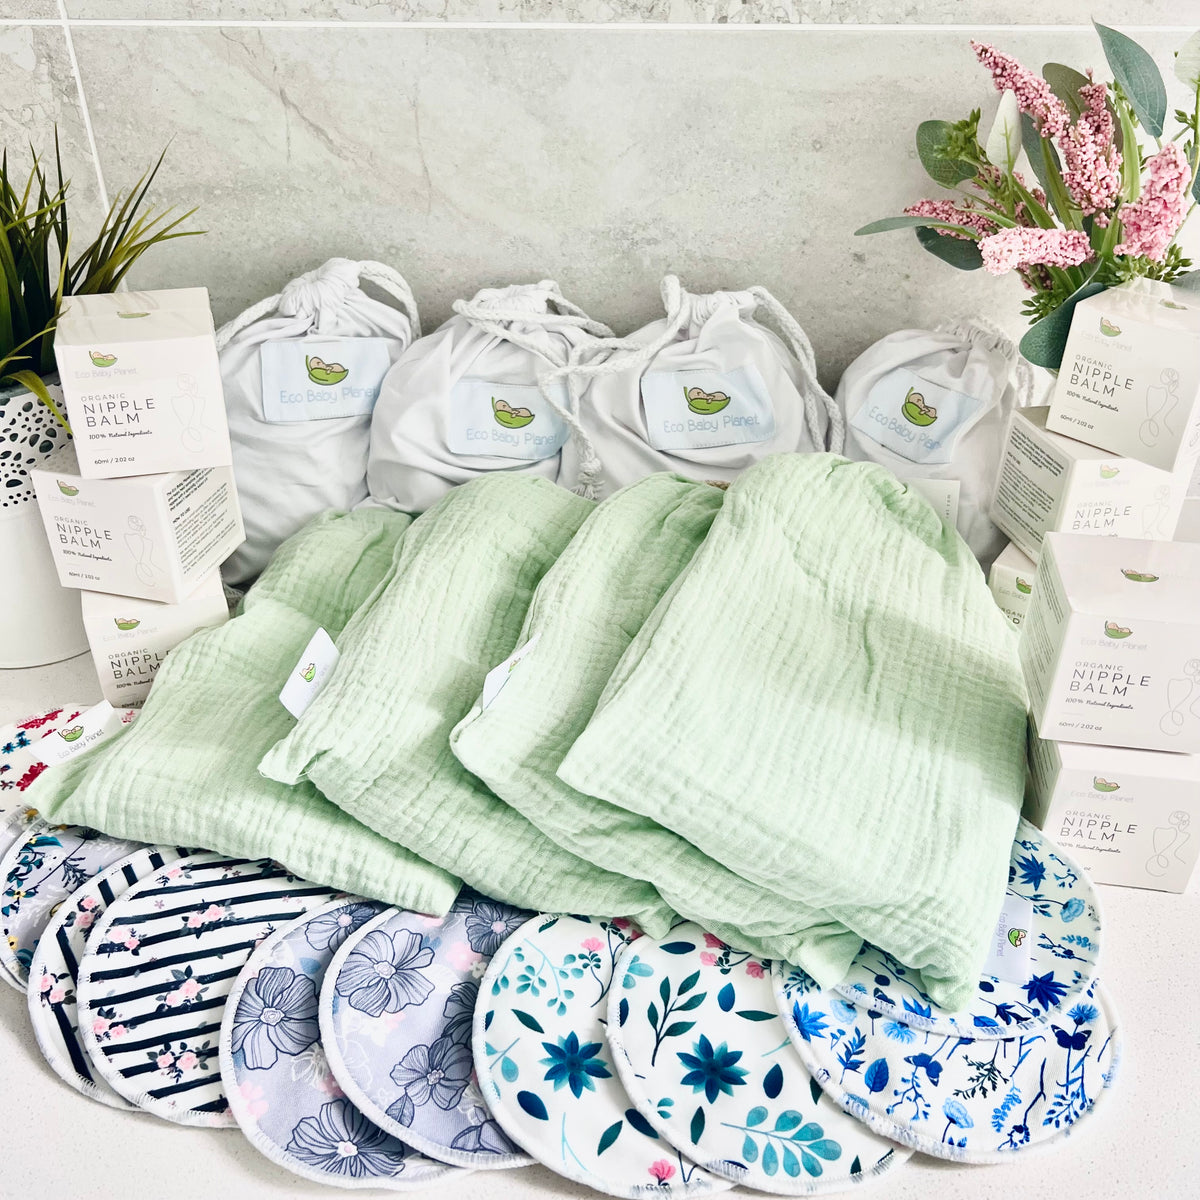 Breastfeeding Trio Bundle - 1 Nursing Cover + 1 Nursing Pads Set + 1 Nursing Balm - Bulk Buy for Mother's Groups, Free Shipping